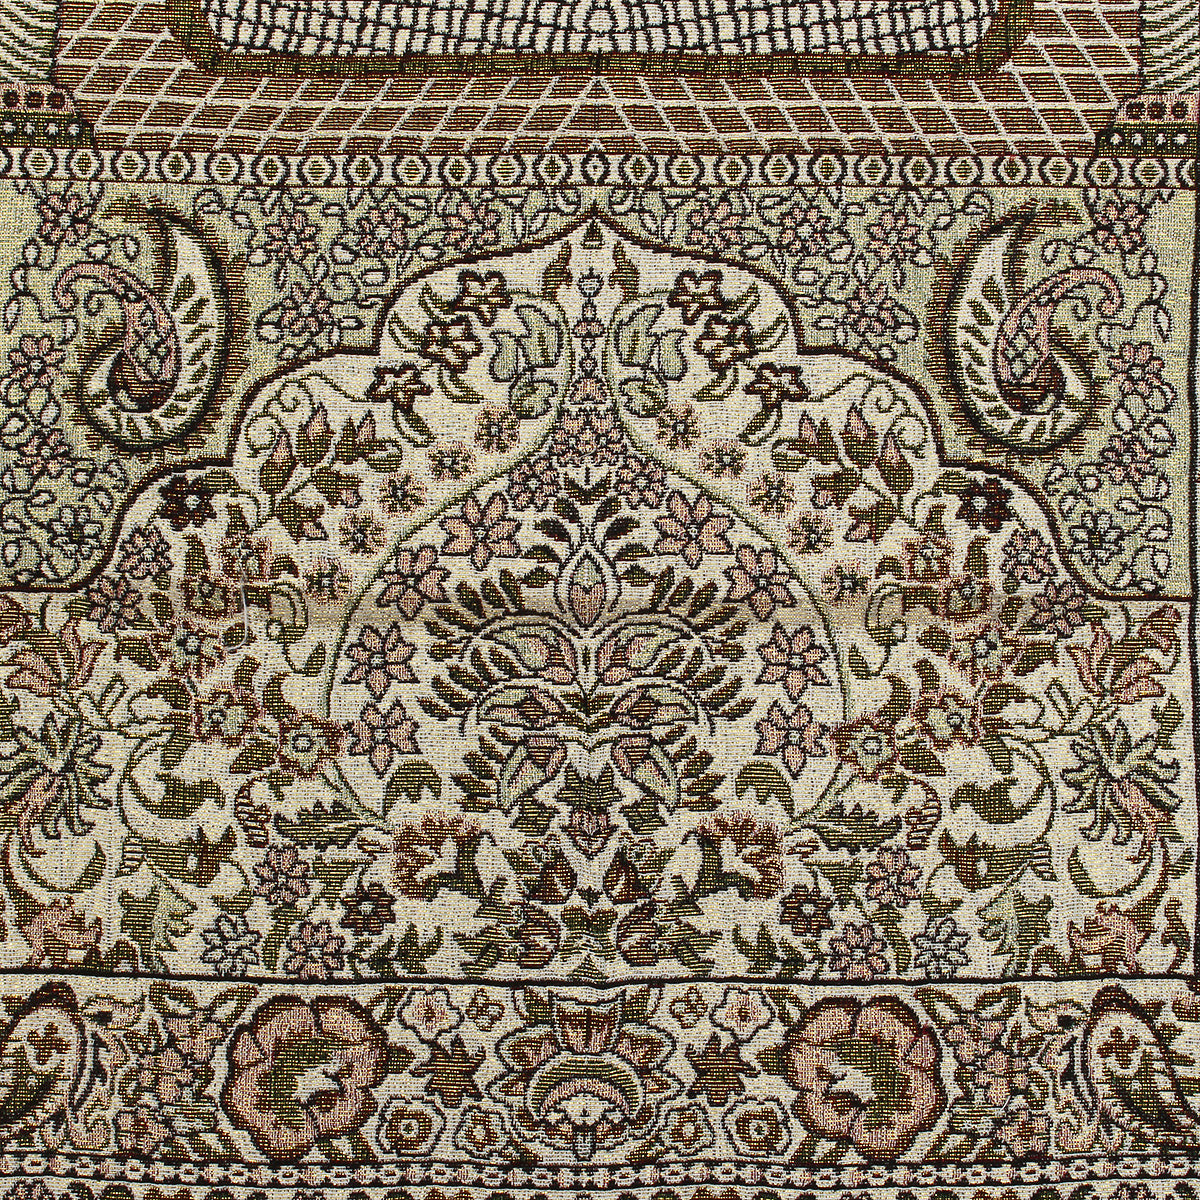 110 x 70cm Islamic Prayer Rug Musallah Prayer Mat Carpet for Home Travel